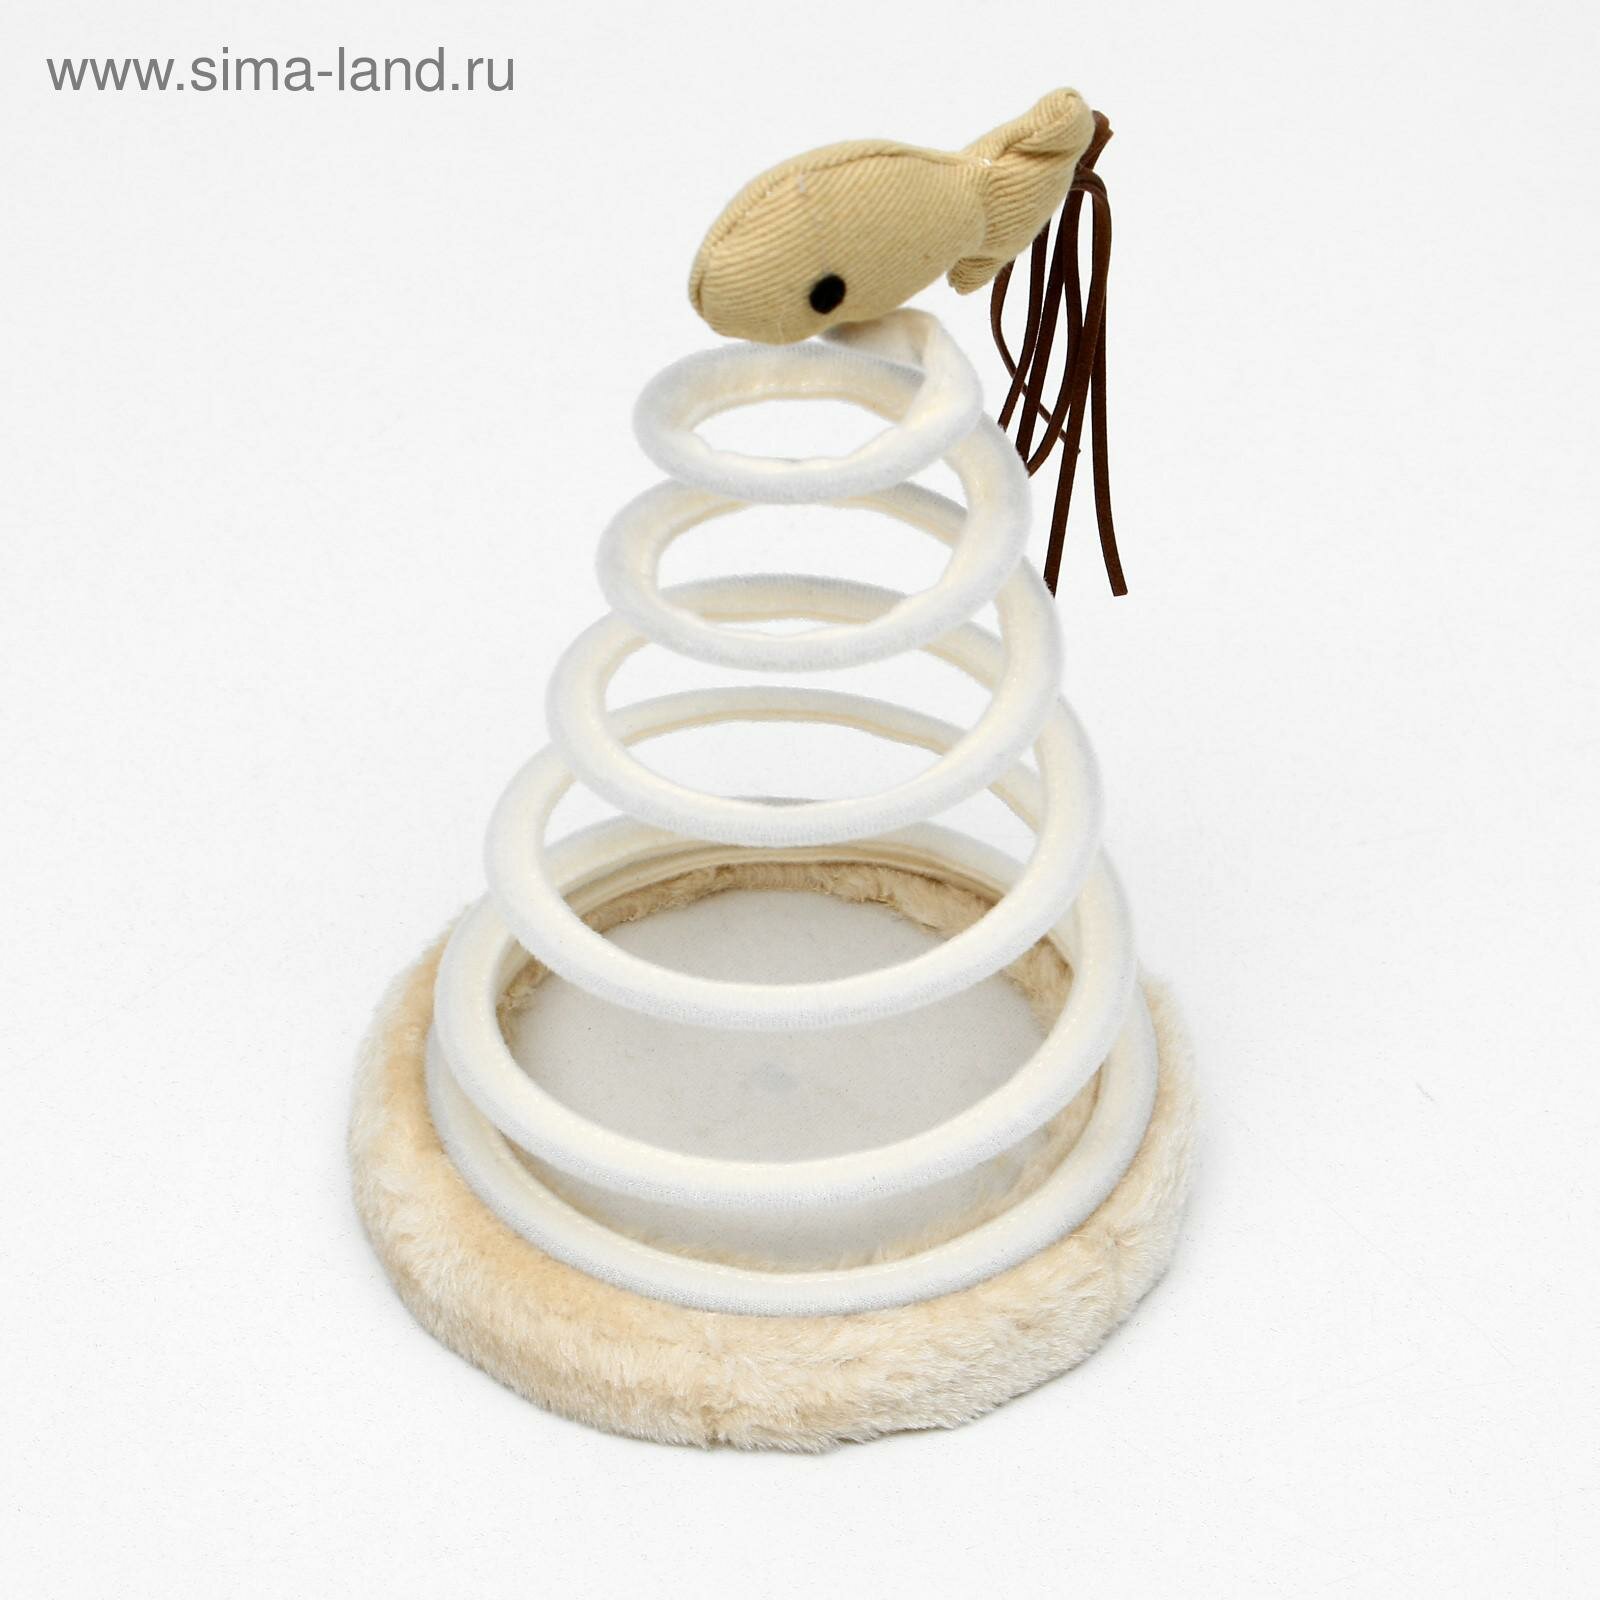 Игрушка-дразнилка для кошек "Игрушка на спирали" - фотография № 3